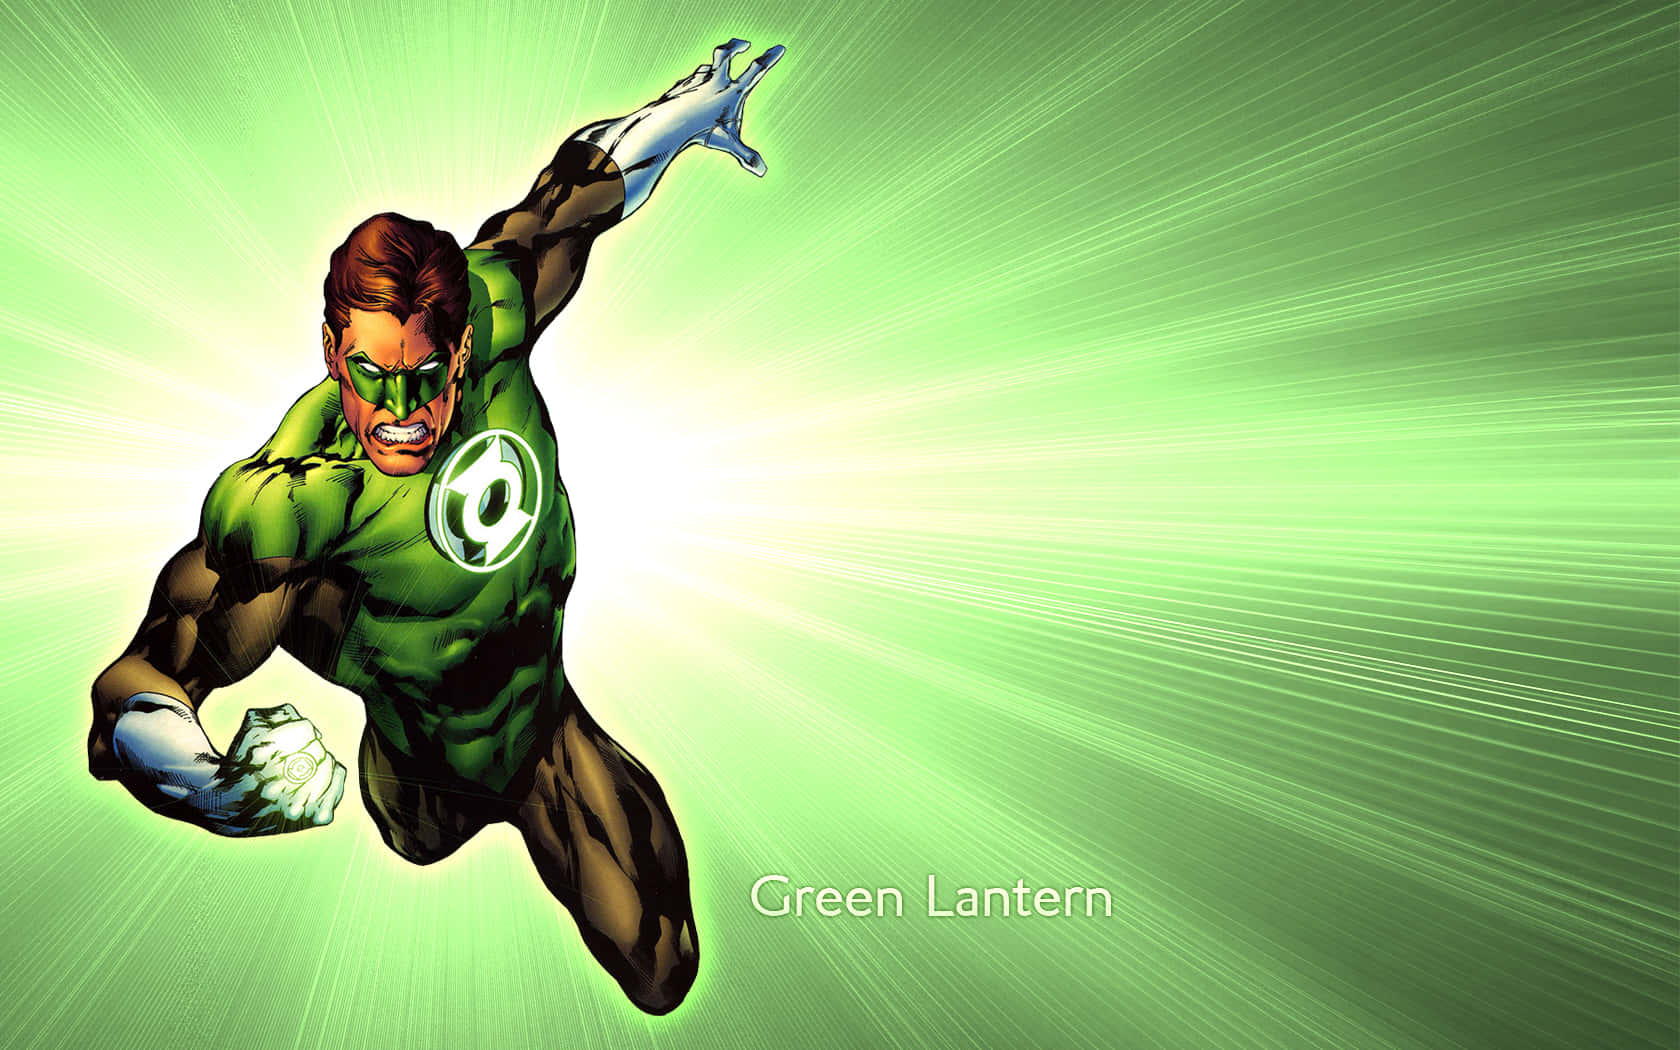 Endesktop Baggrund Med Den Ikoniske Green Lantern Karakter.